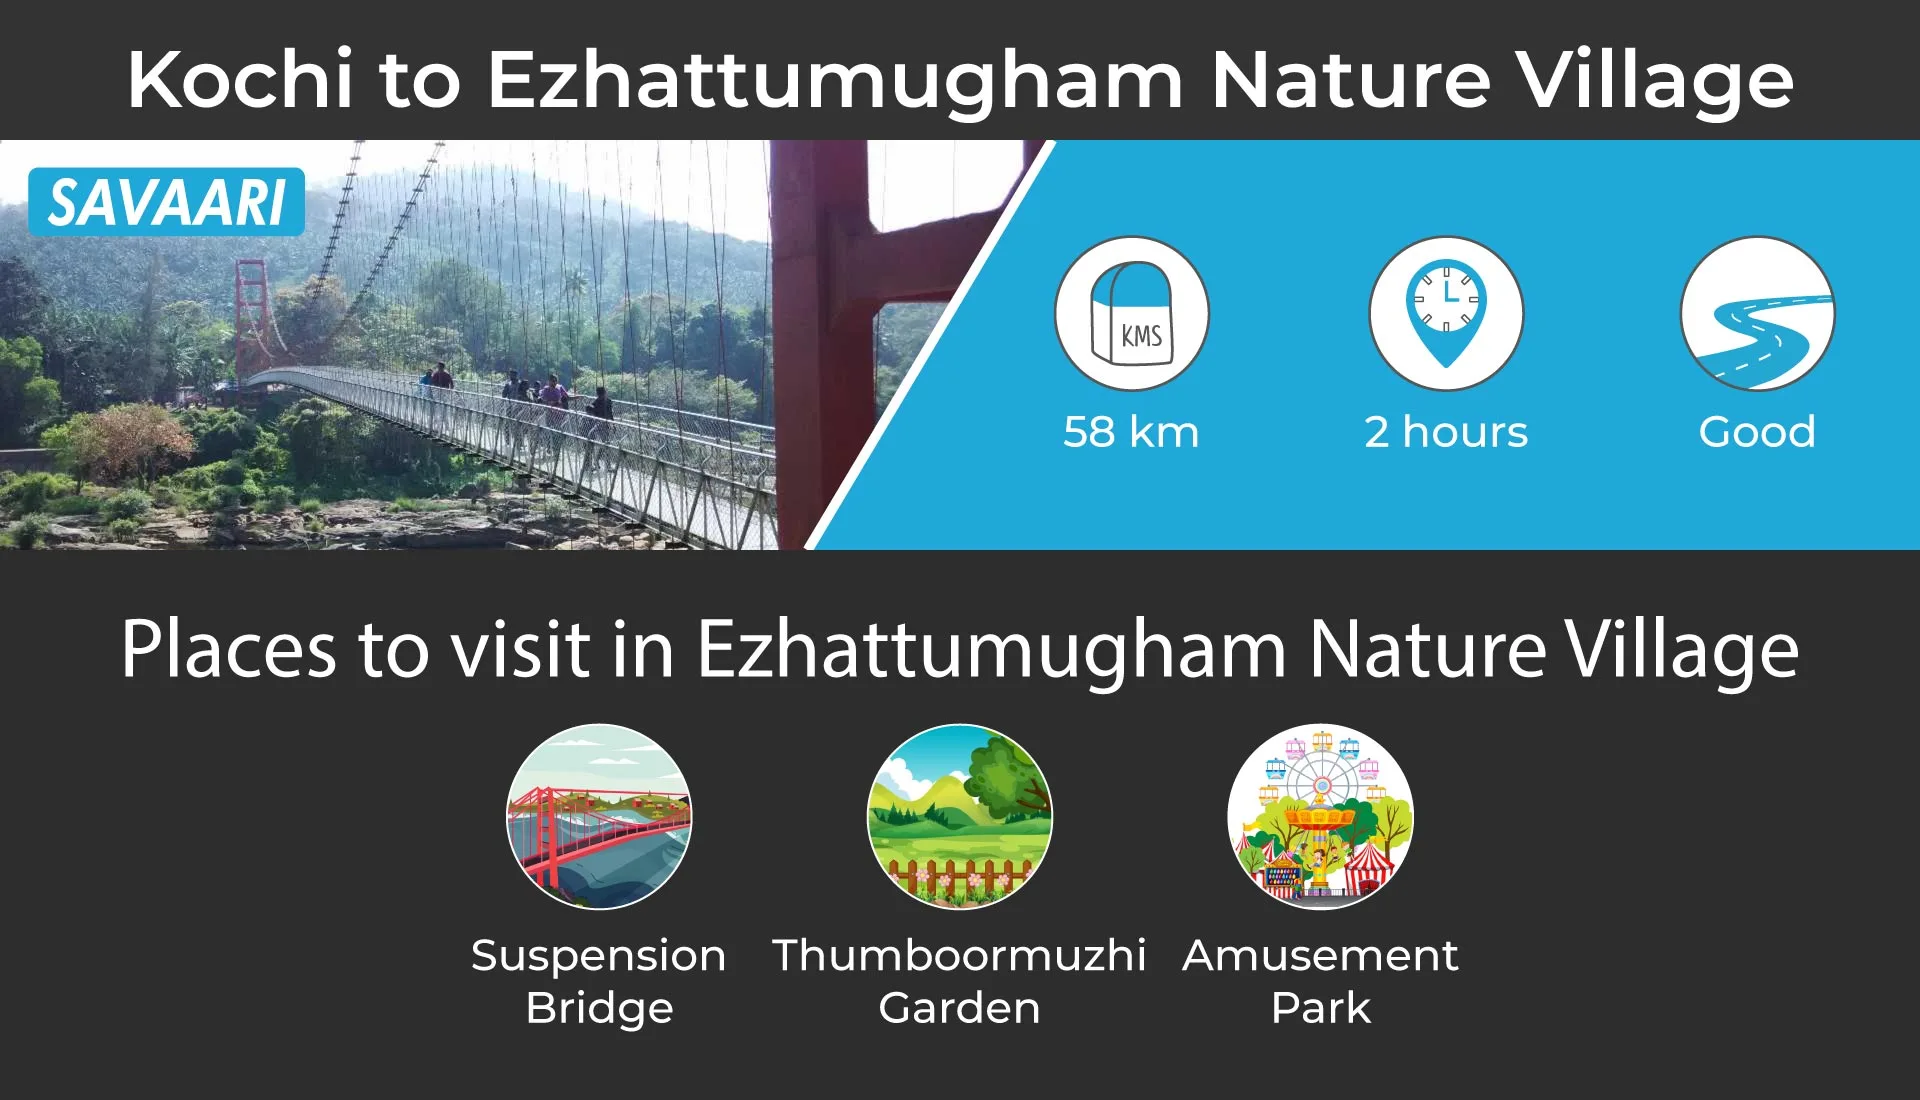 Kochi to Ezhattumugham Nature Village a scenic road trip